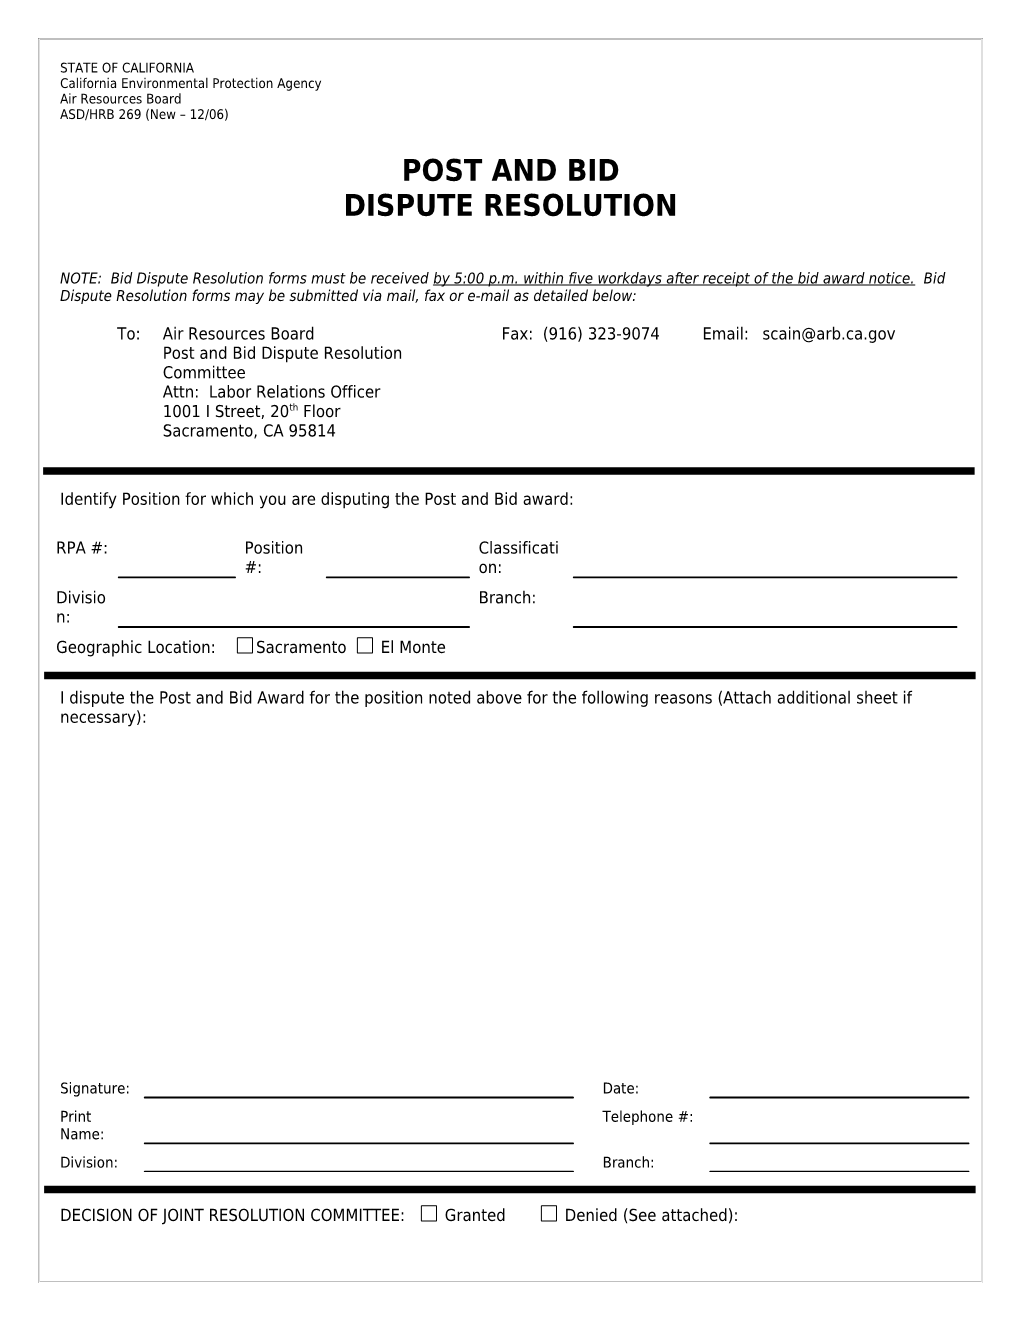 AS - Jobs: Post & Bid - Dispute Resolution Form (New - 12/06)